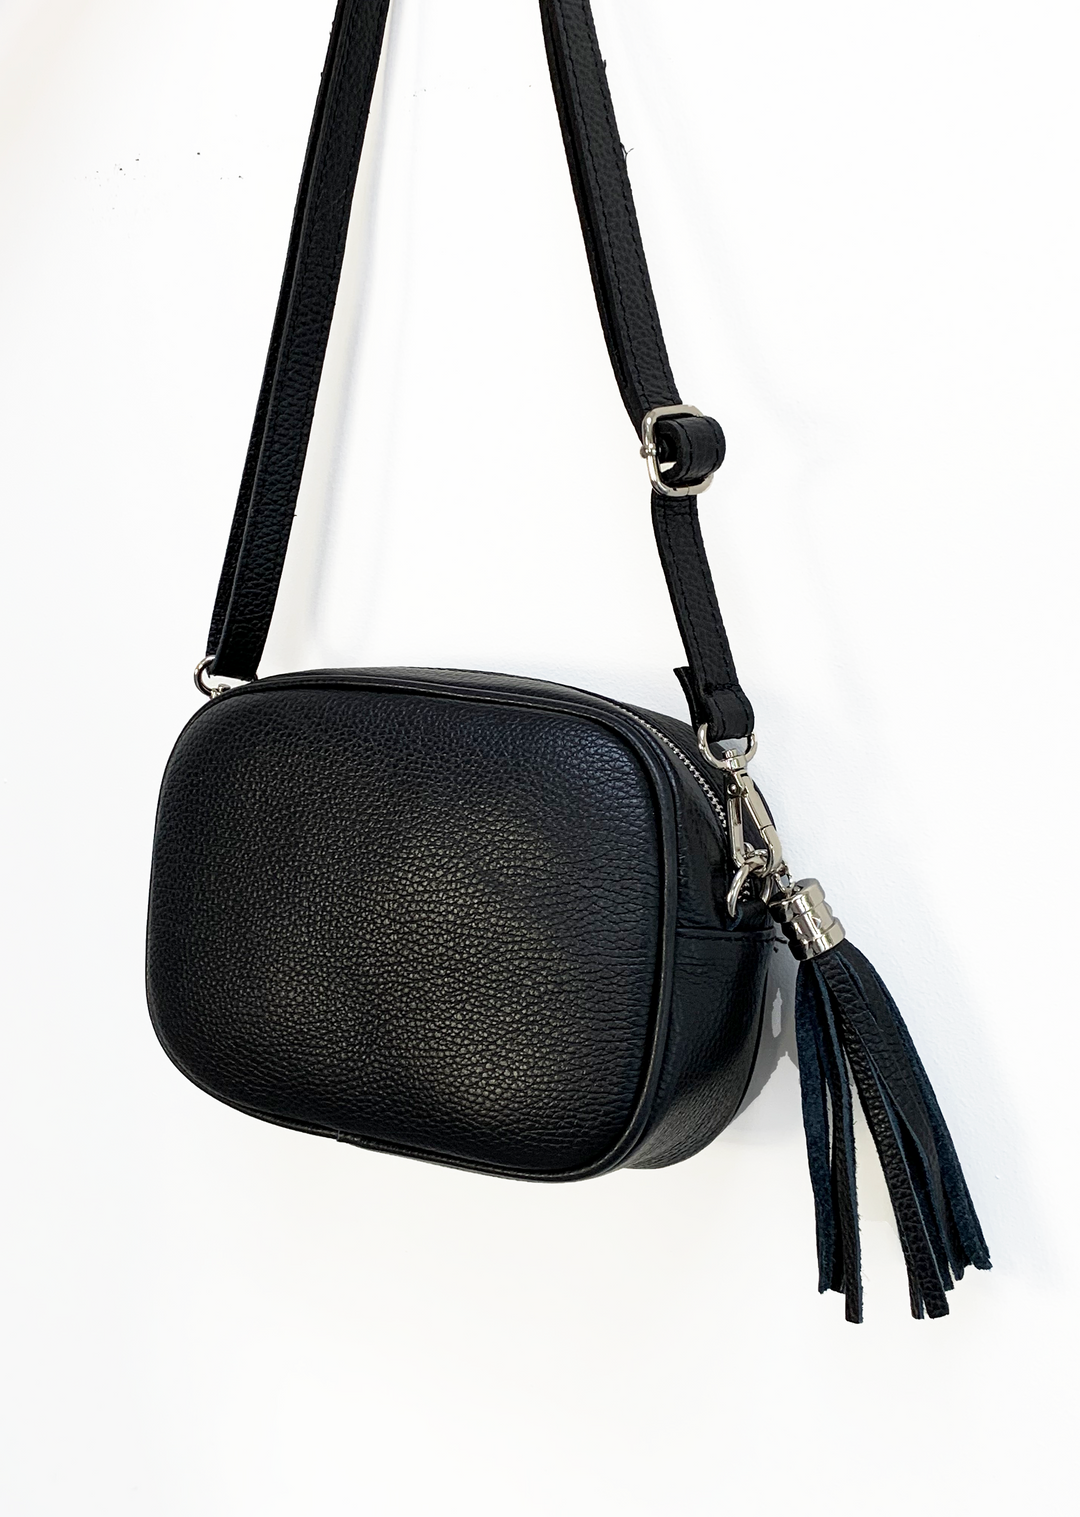 The Global Leather Bag - Black